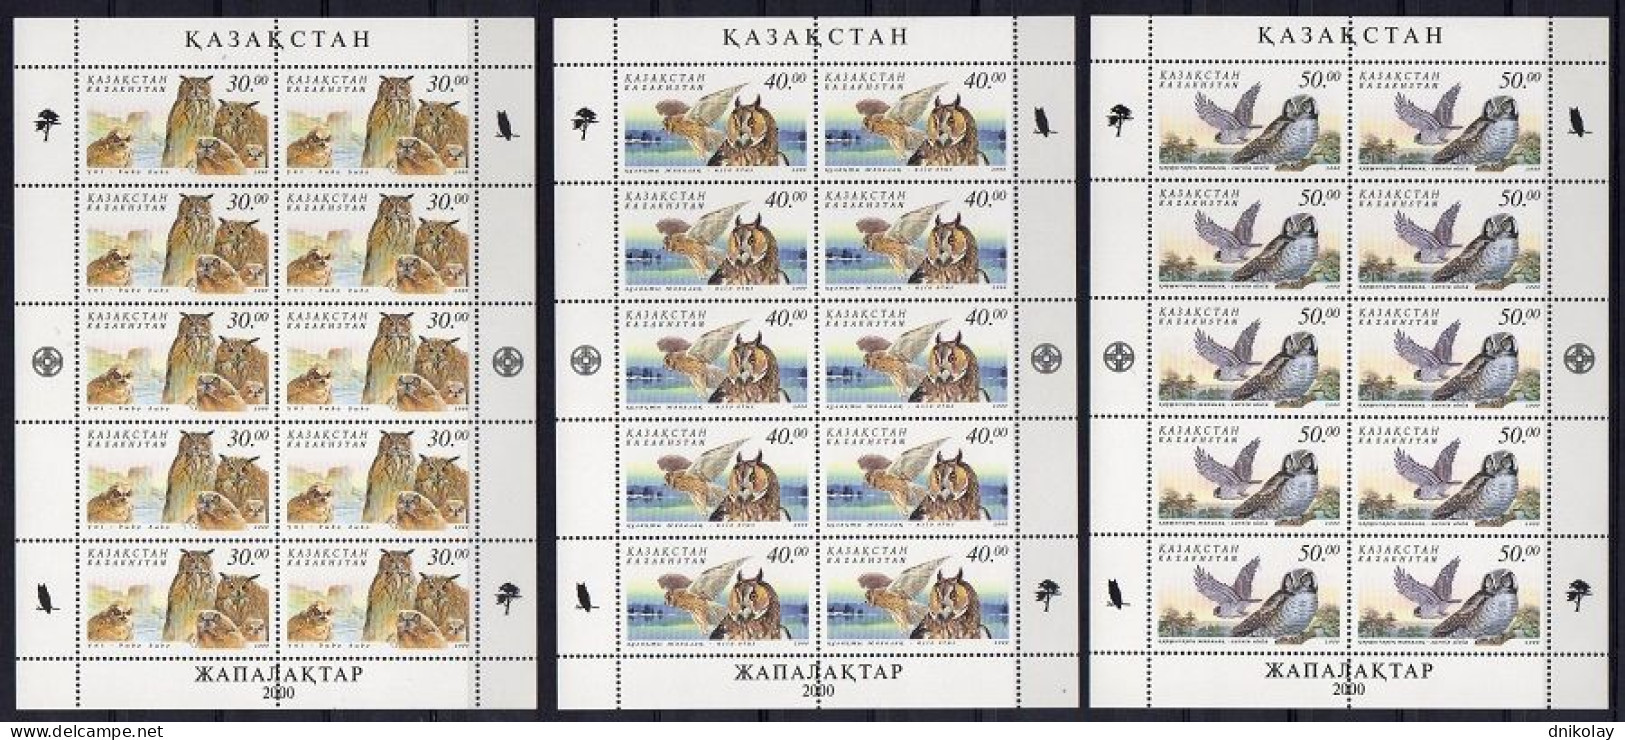 2001 326 Kazakhstan Owls MNH - Kazachstan